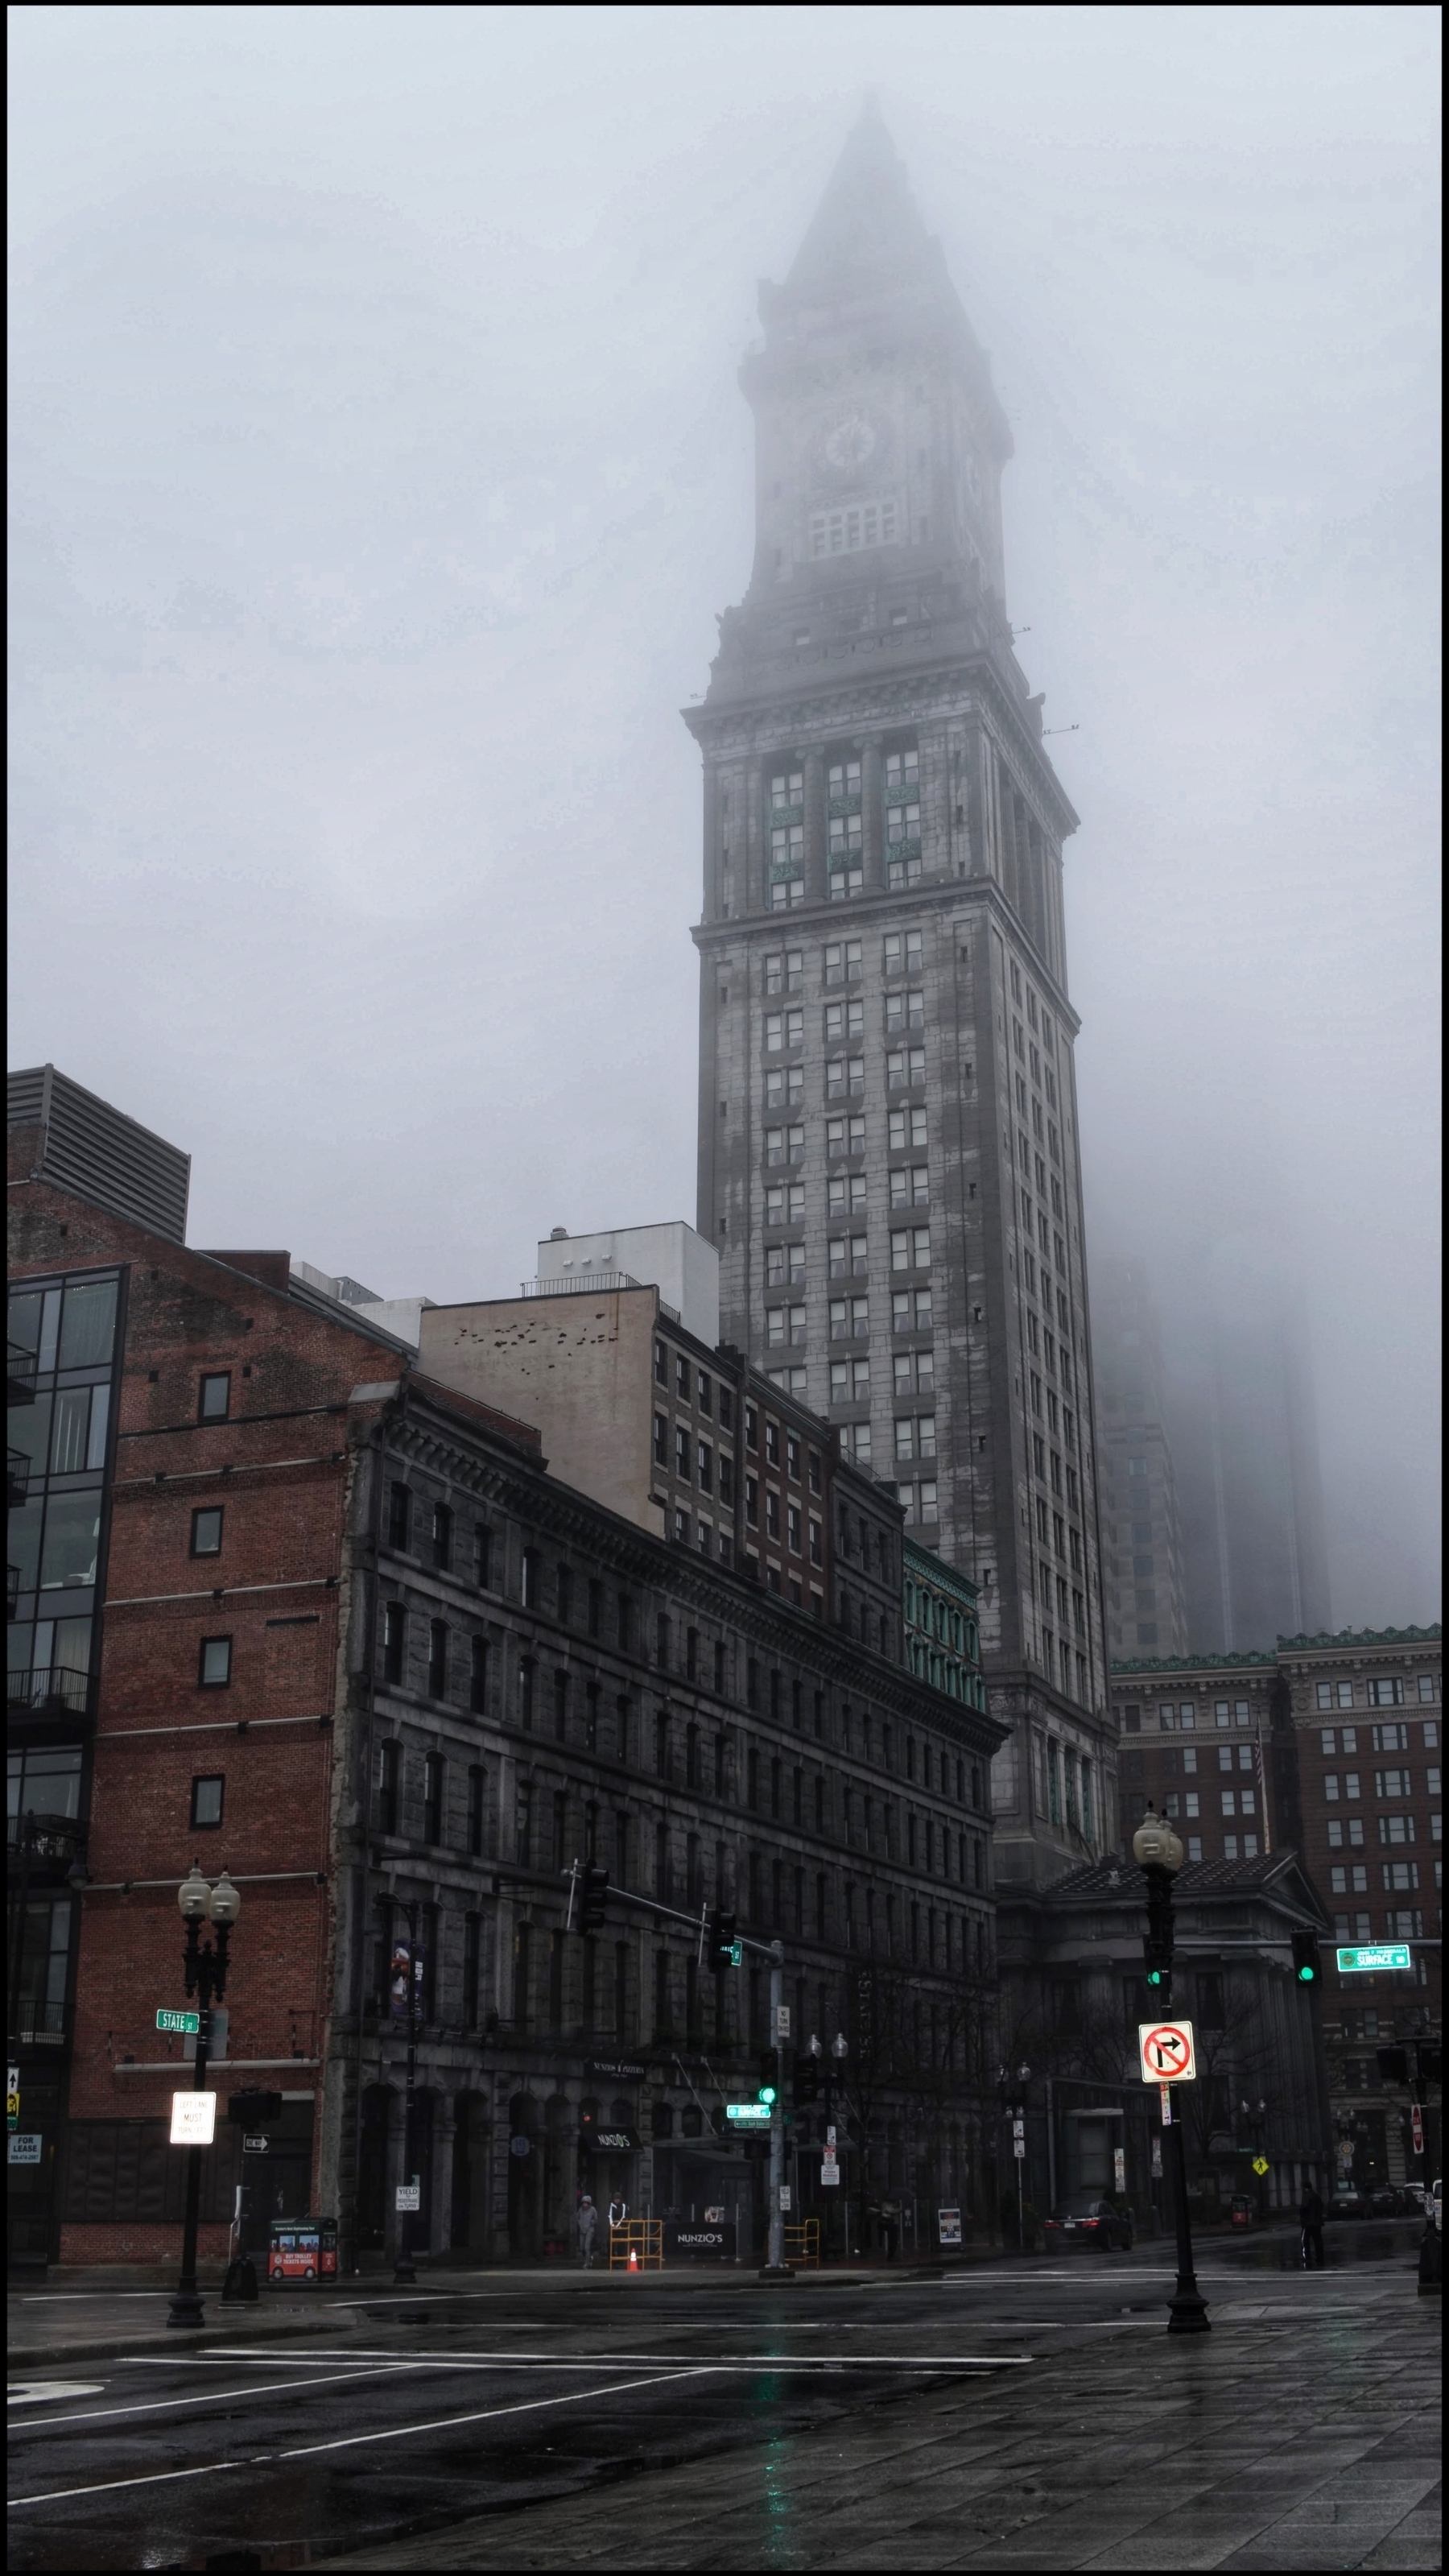 It was a dark and stormy/gloomy/rainy/foggy day in Downtown Boston. 